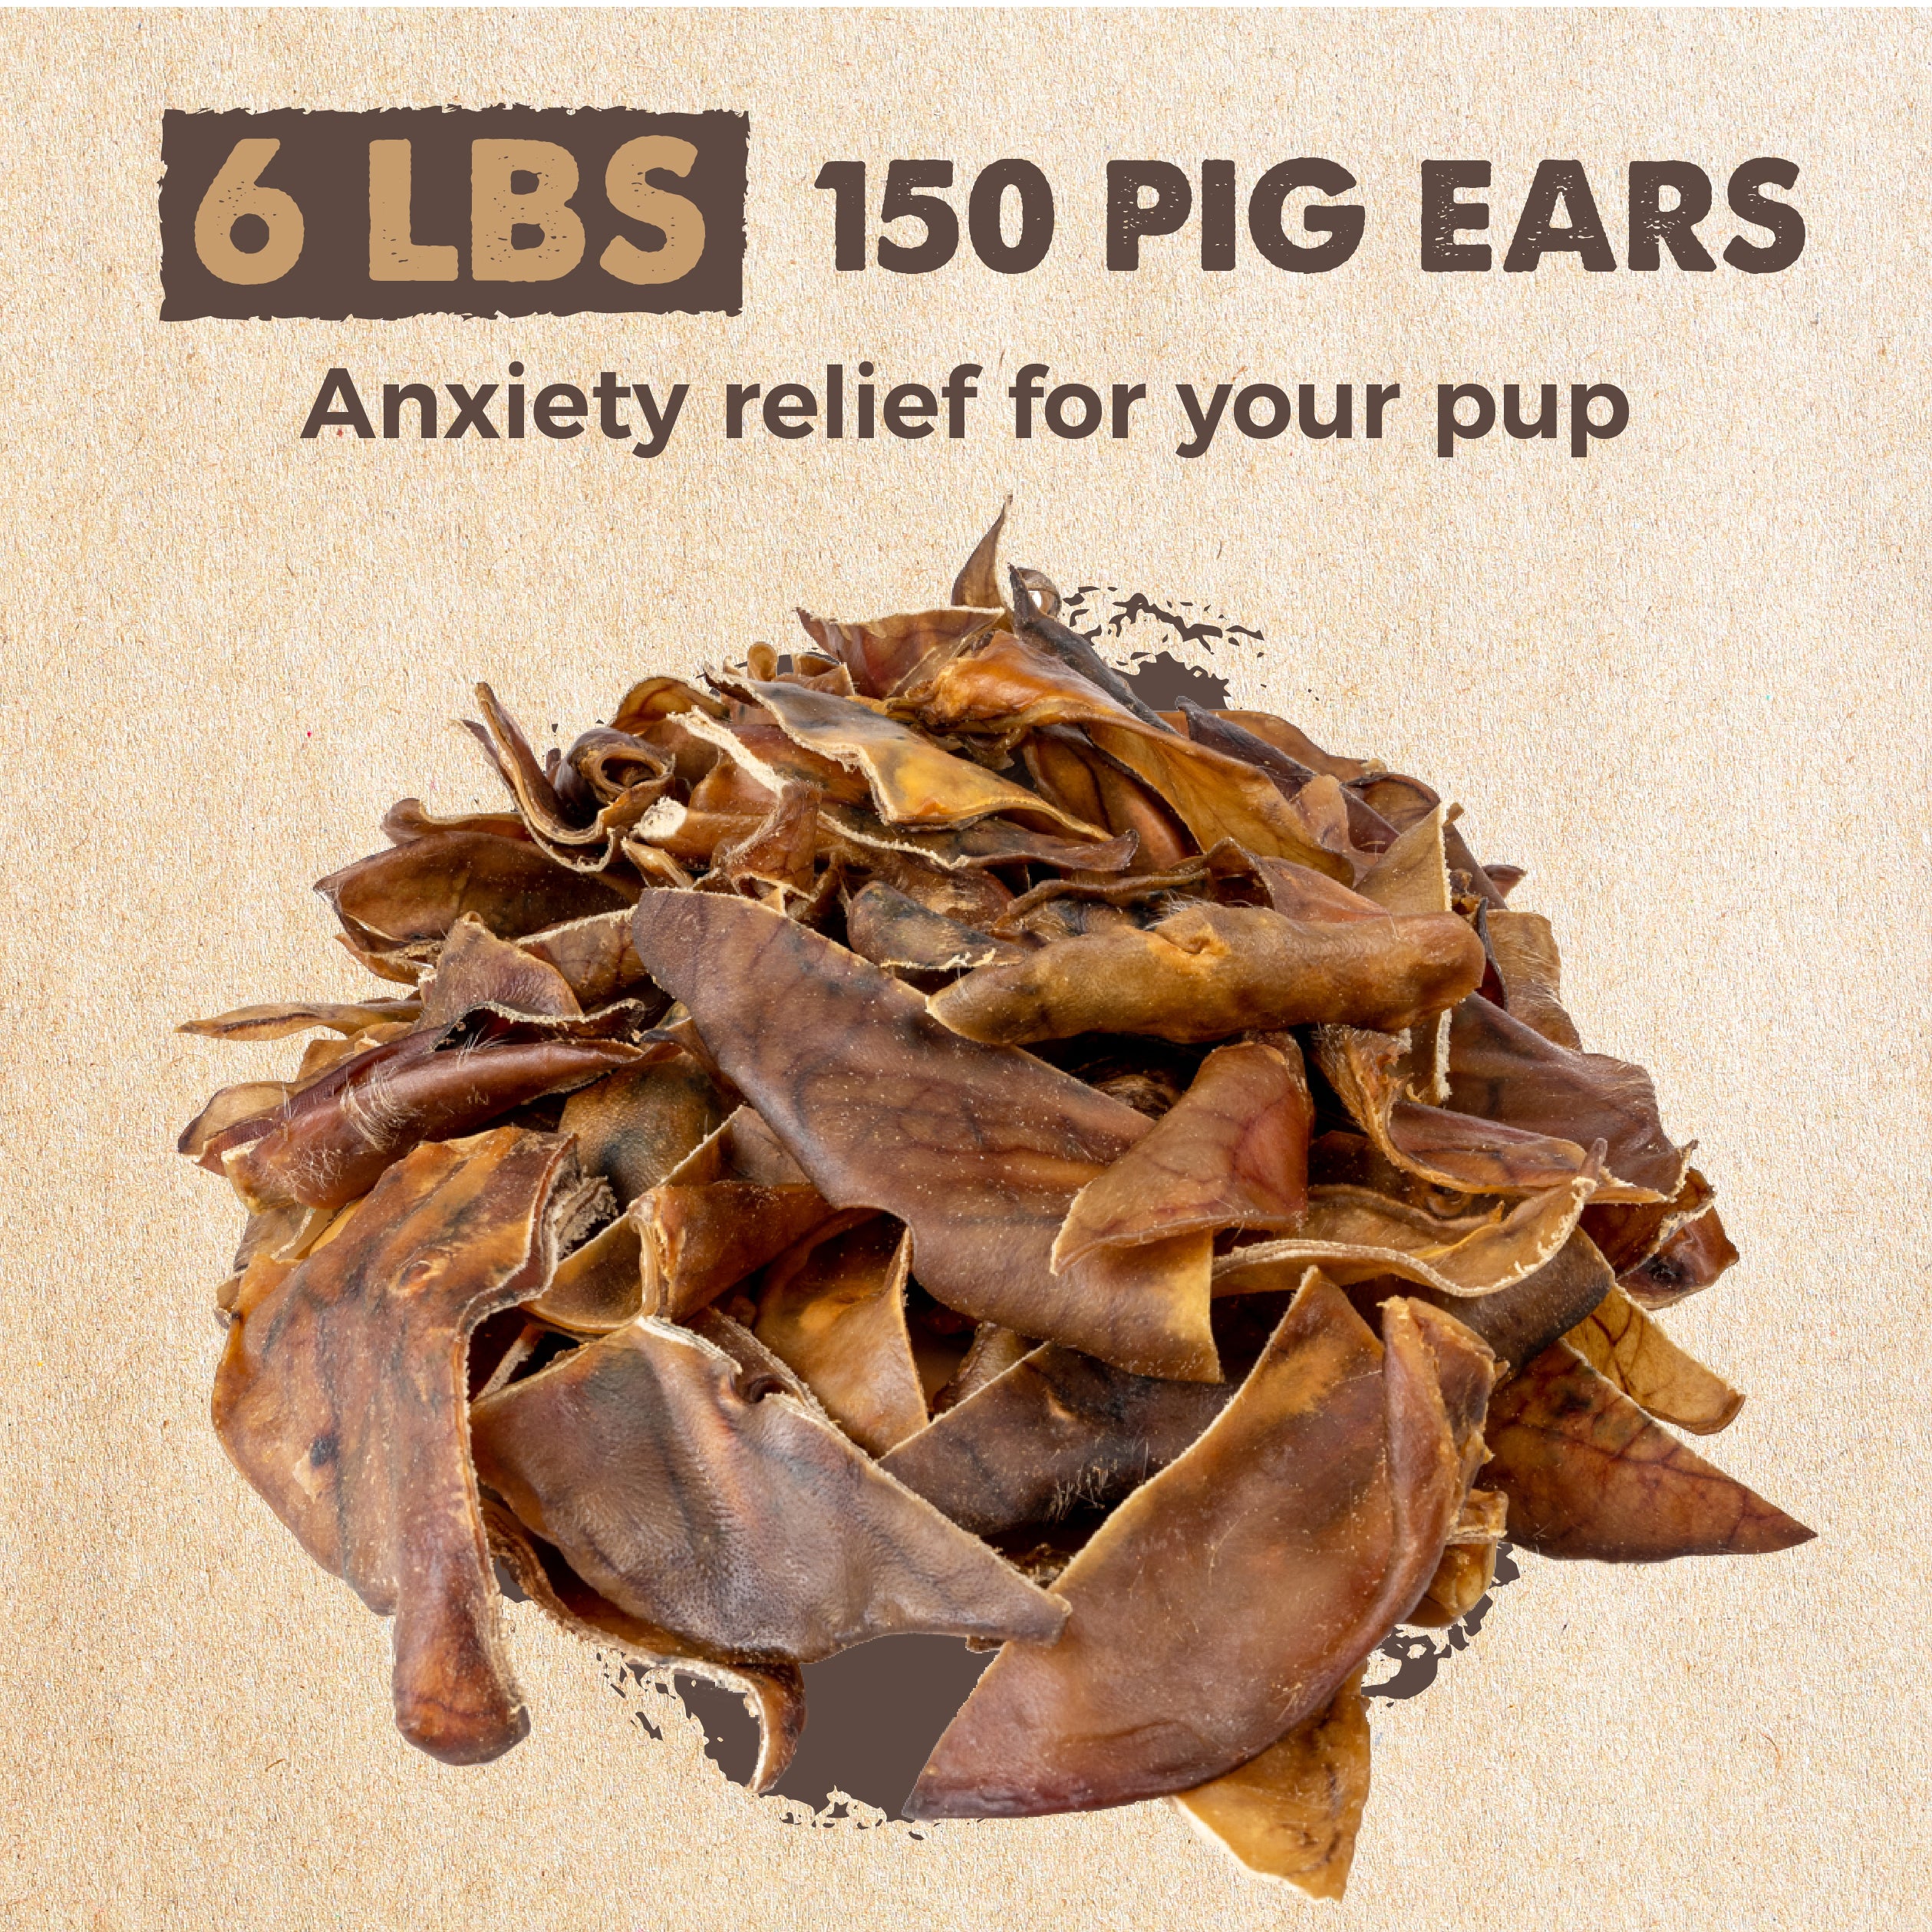 Natural Pig Ear Chews - Bulk Pack for Dogs